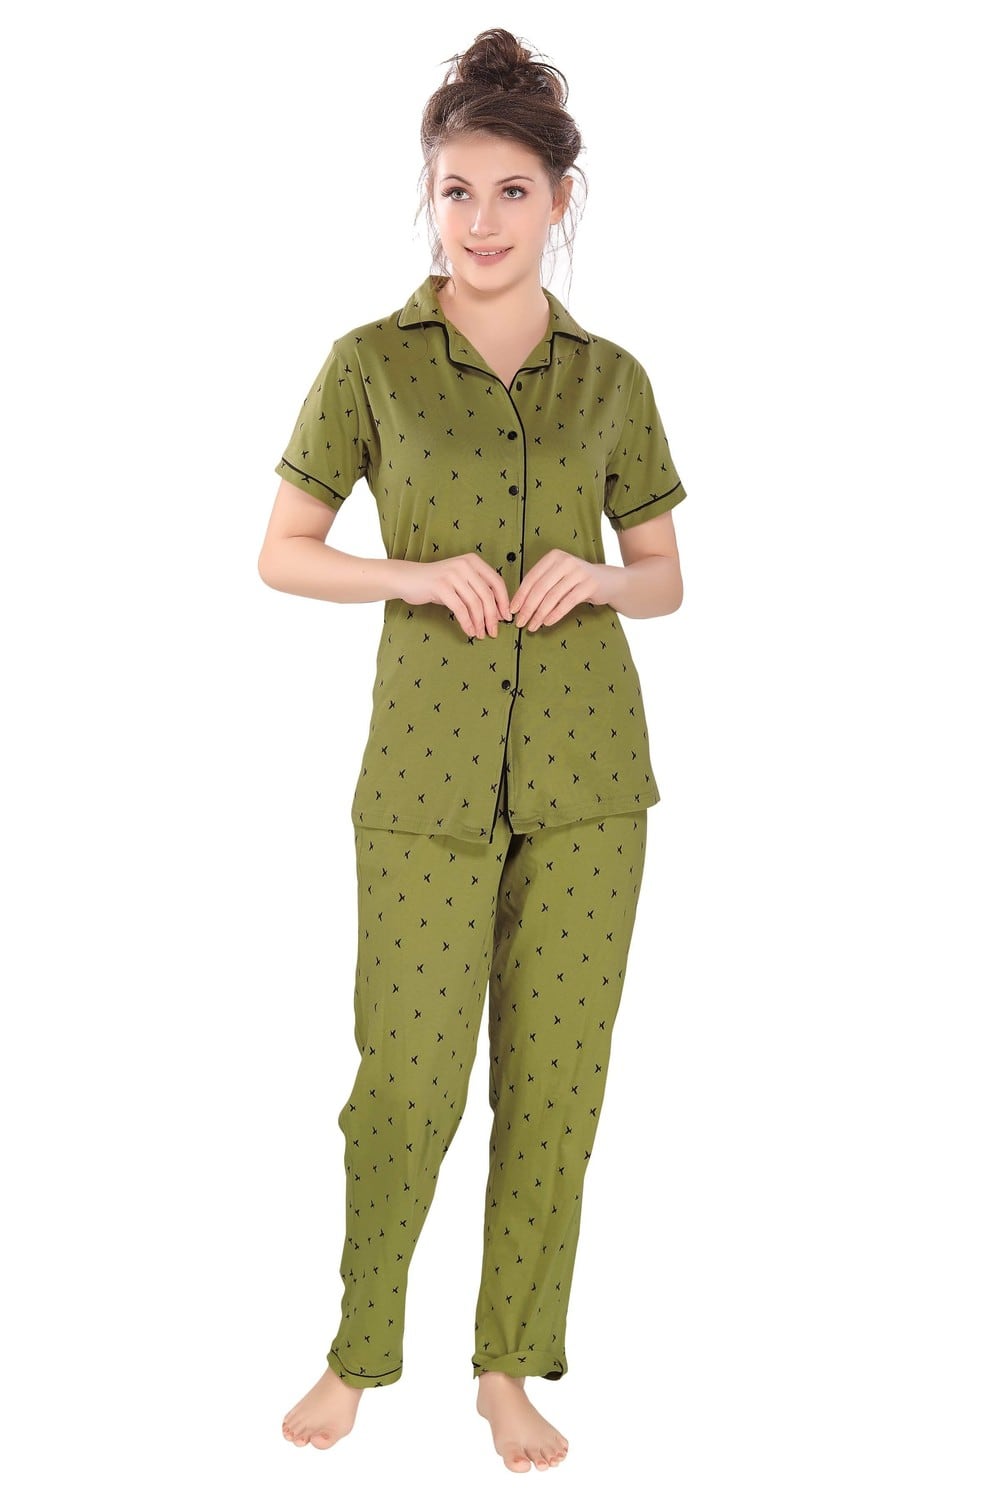 Pierre Donna Women's Cotton Pajama set With Pants - Women Sleepwear Green Color AVL - Dealz Souq